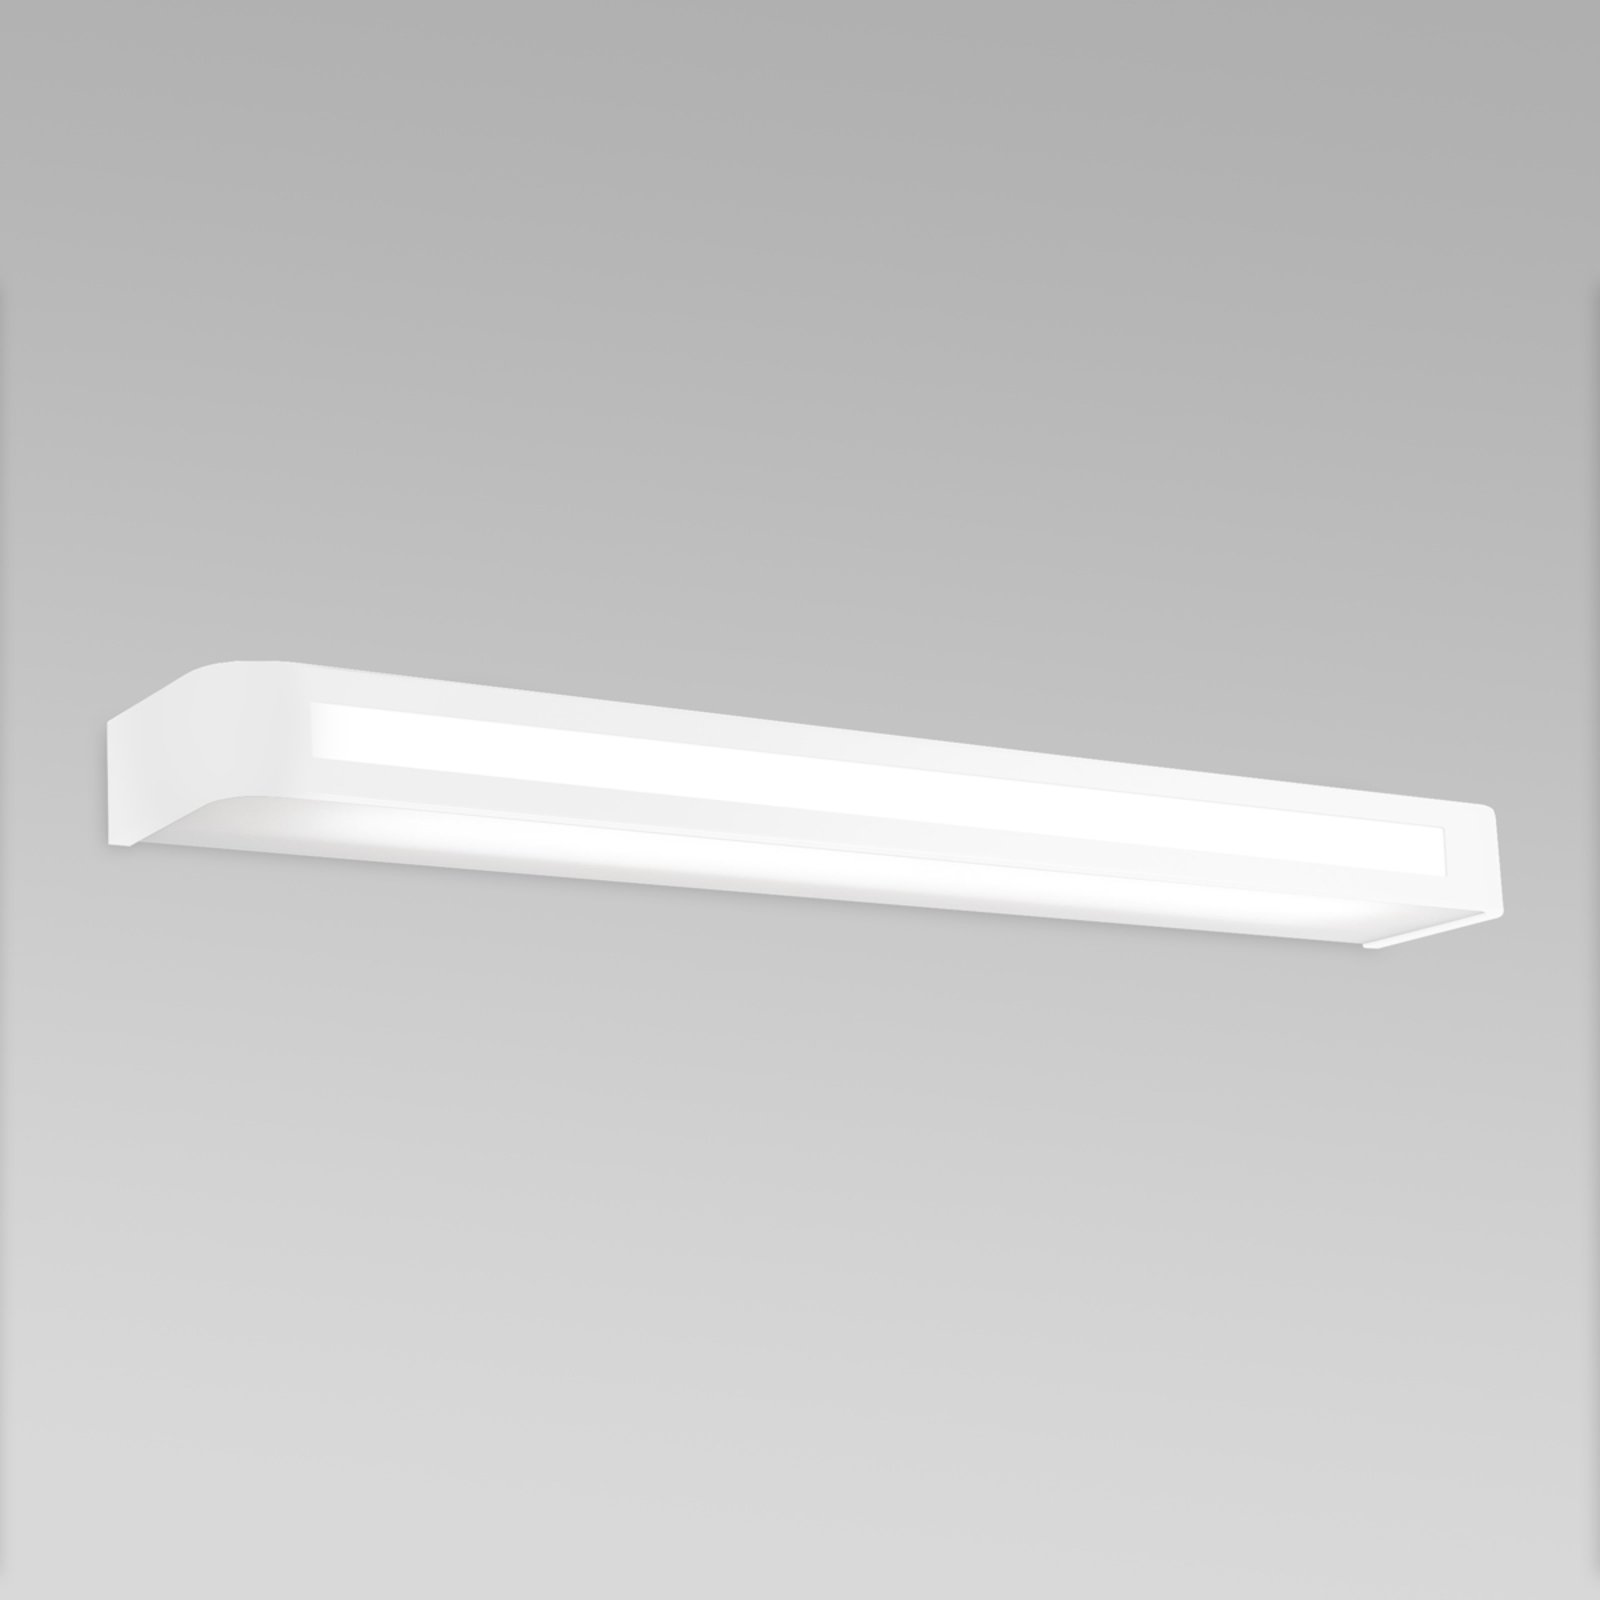 Aplique LED intemporal Arcos, IP20 60 cm, blanco